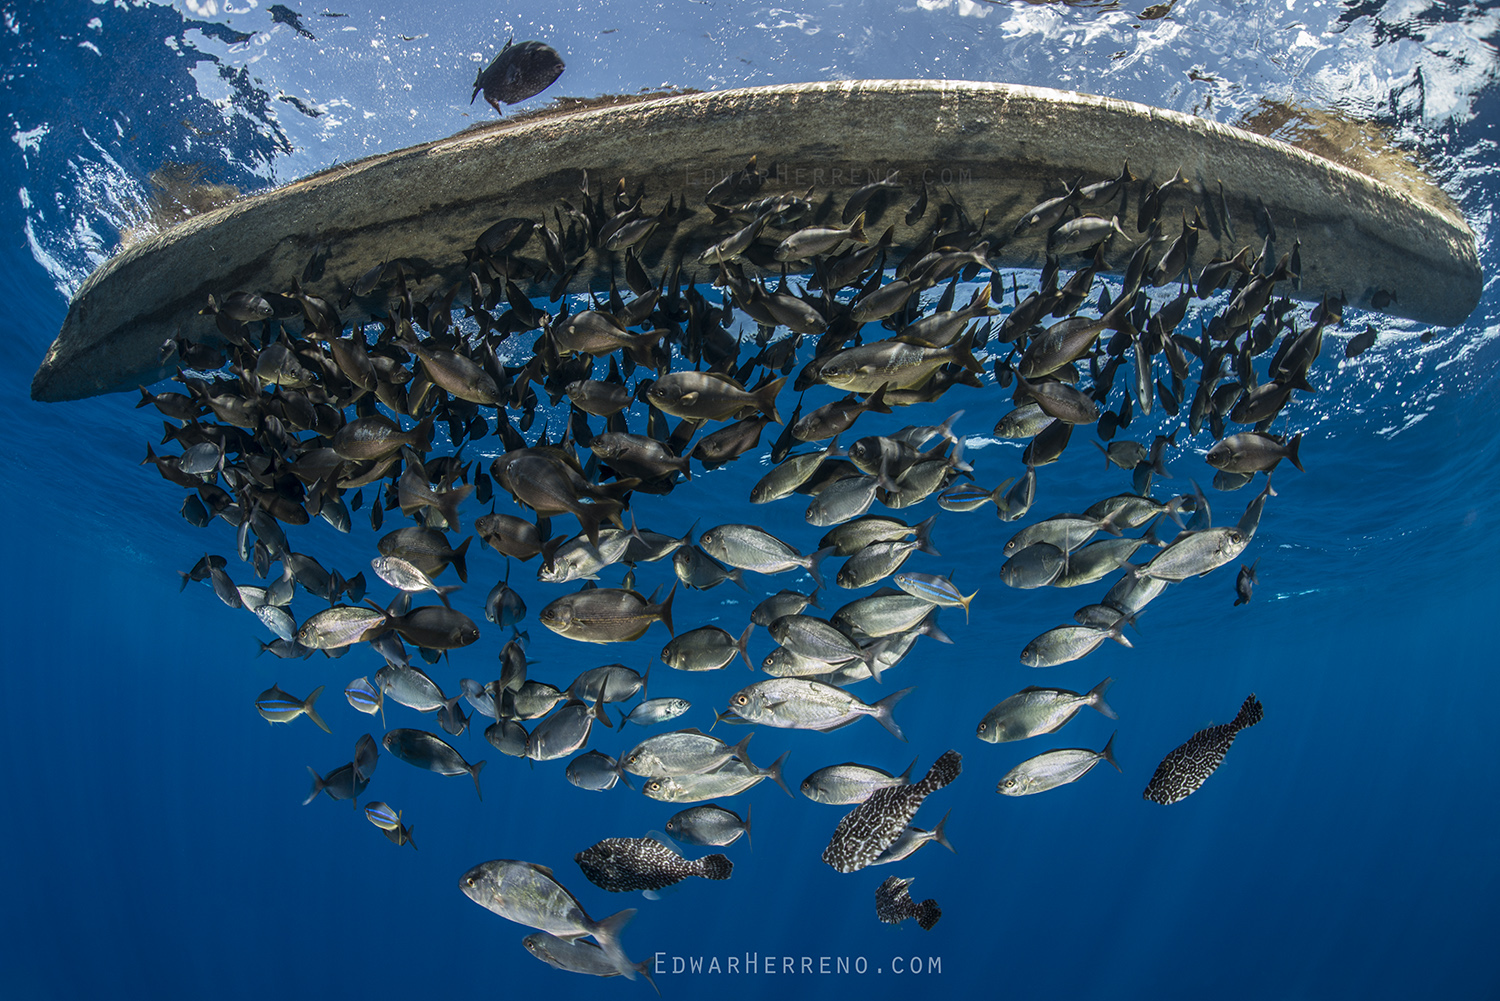 Pelagic Fish Under a Log Drifting in the Eastern Pacific. Cocos Island - Costa Rica.